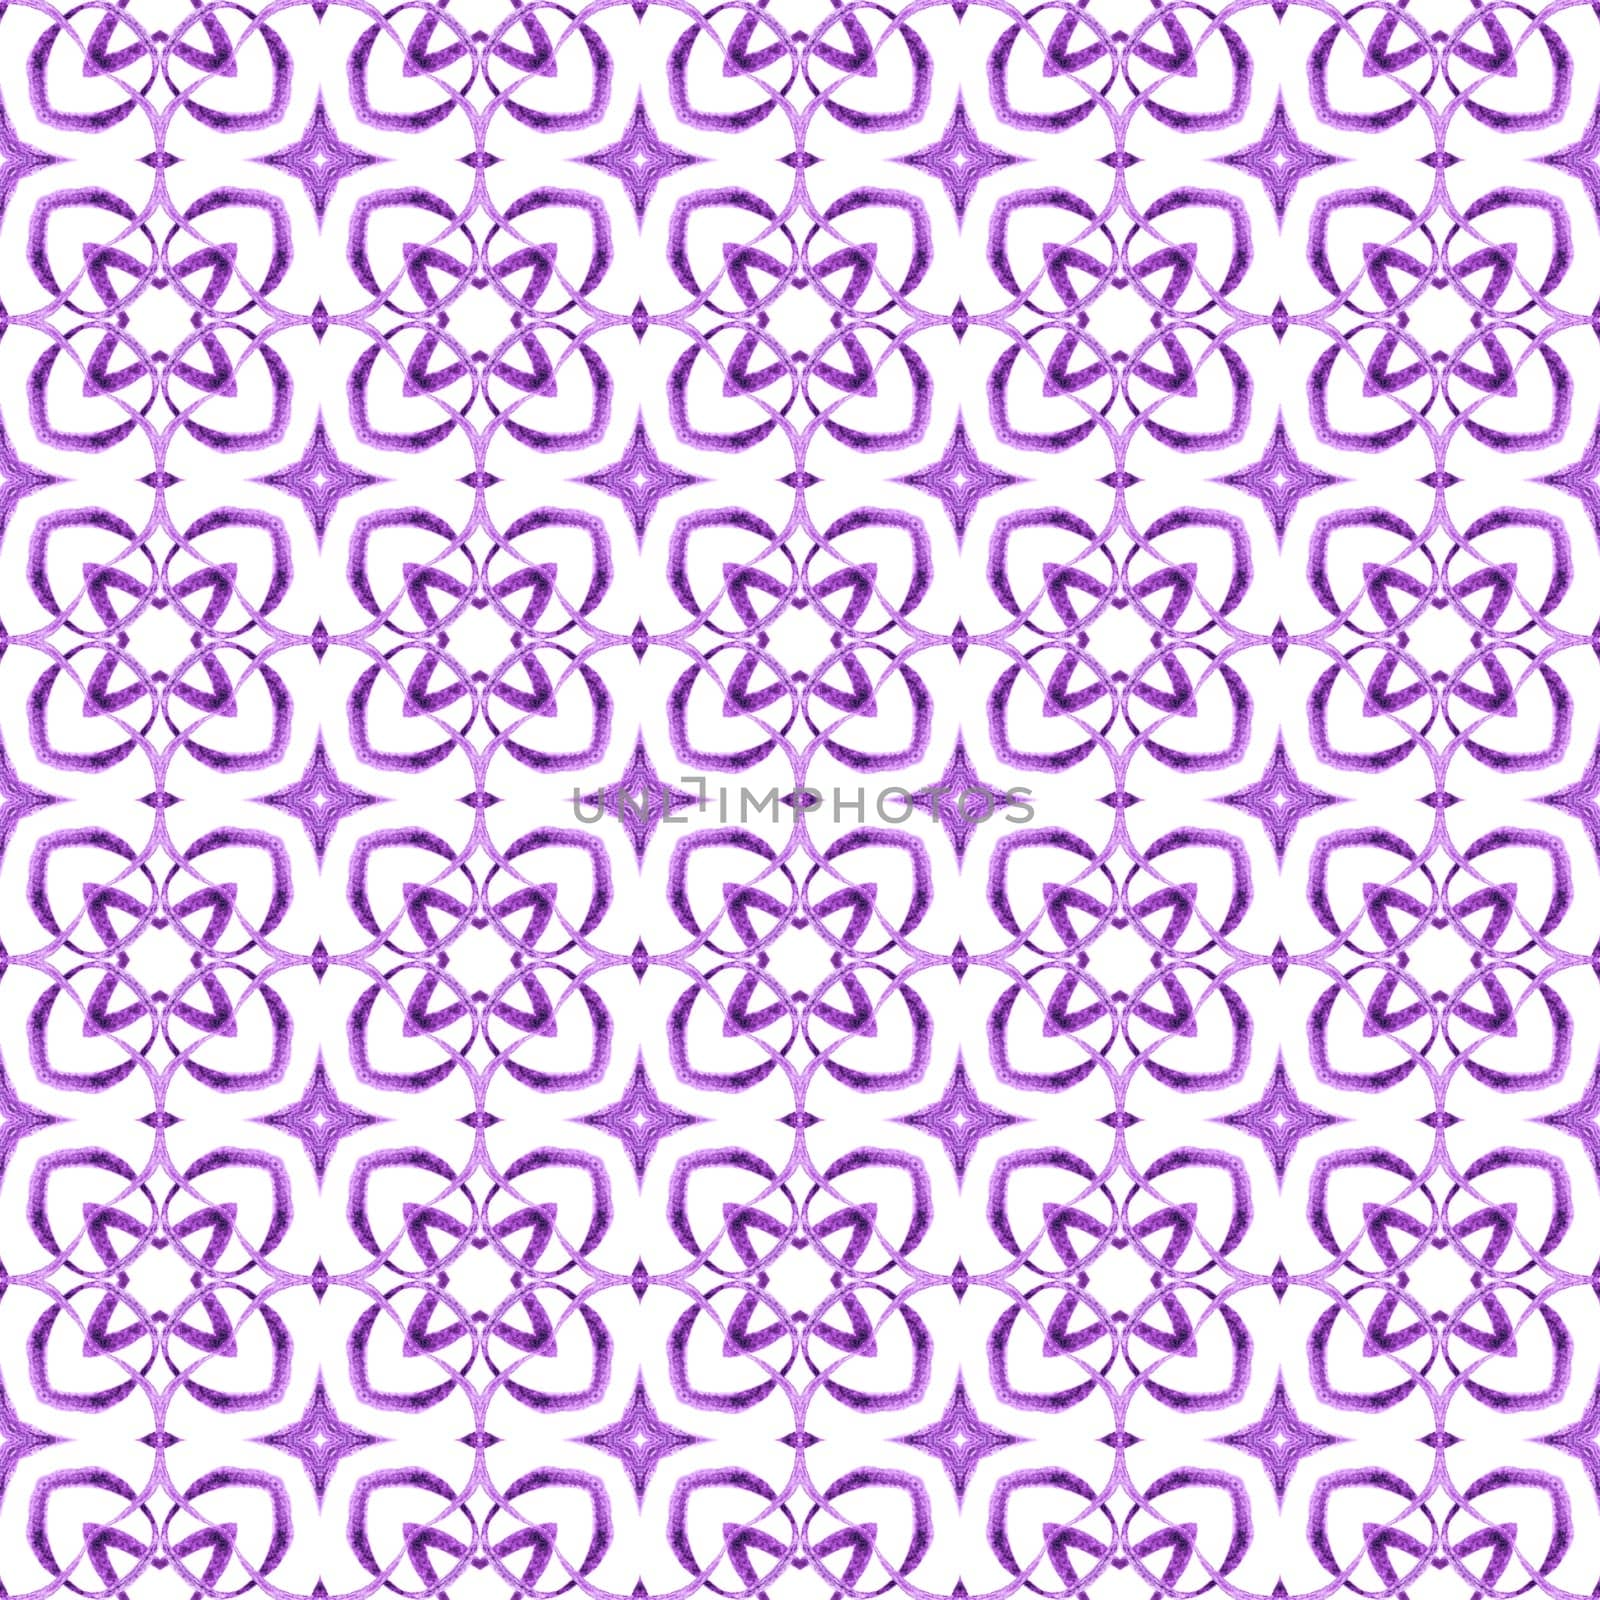 Textile ready alive print, swimwear fabric, wallpaper, wrapping. Purple charming boho chic summer design. Organic tile. Trendy organic green border.